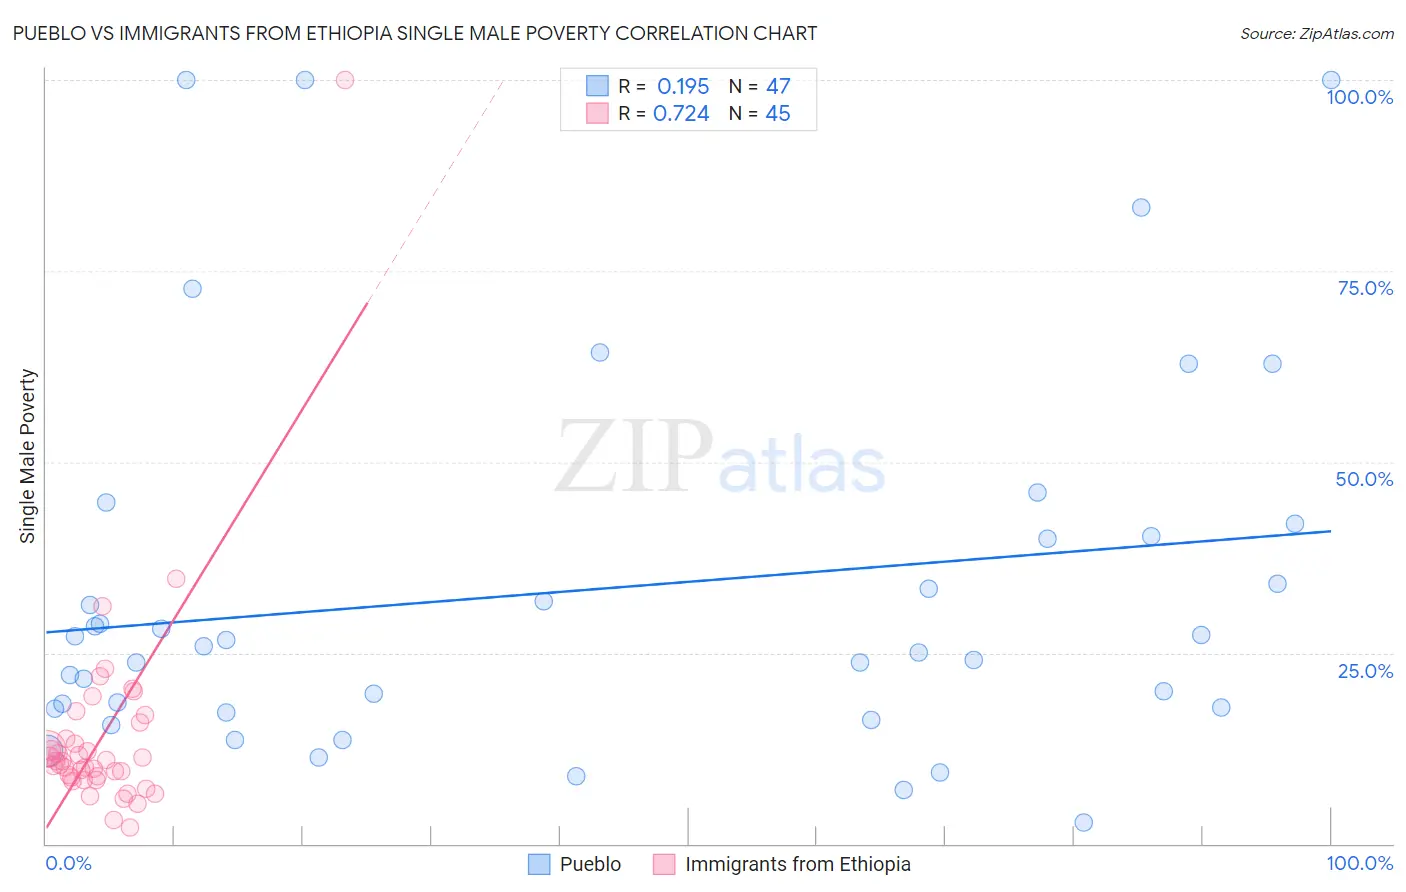 Pueblo vs Immigrants from Ethiopia Single Male Poverty